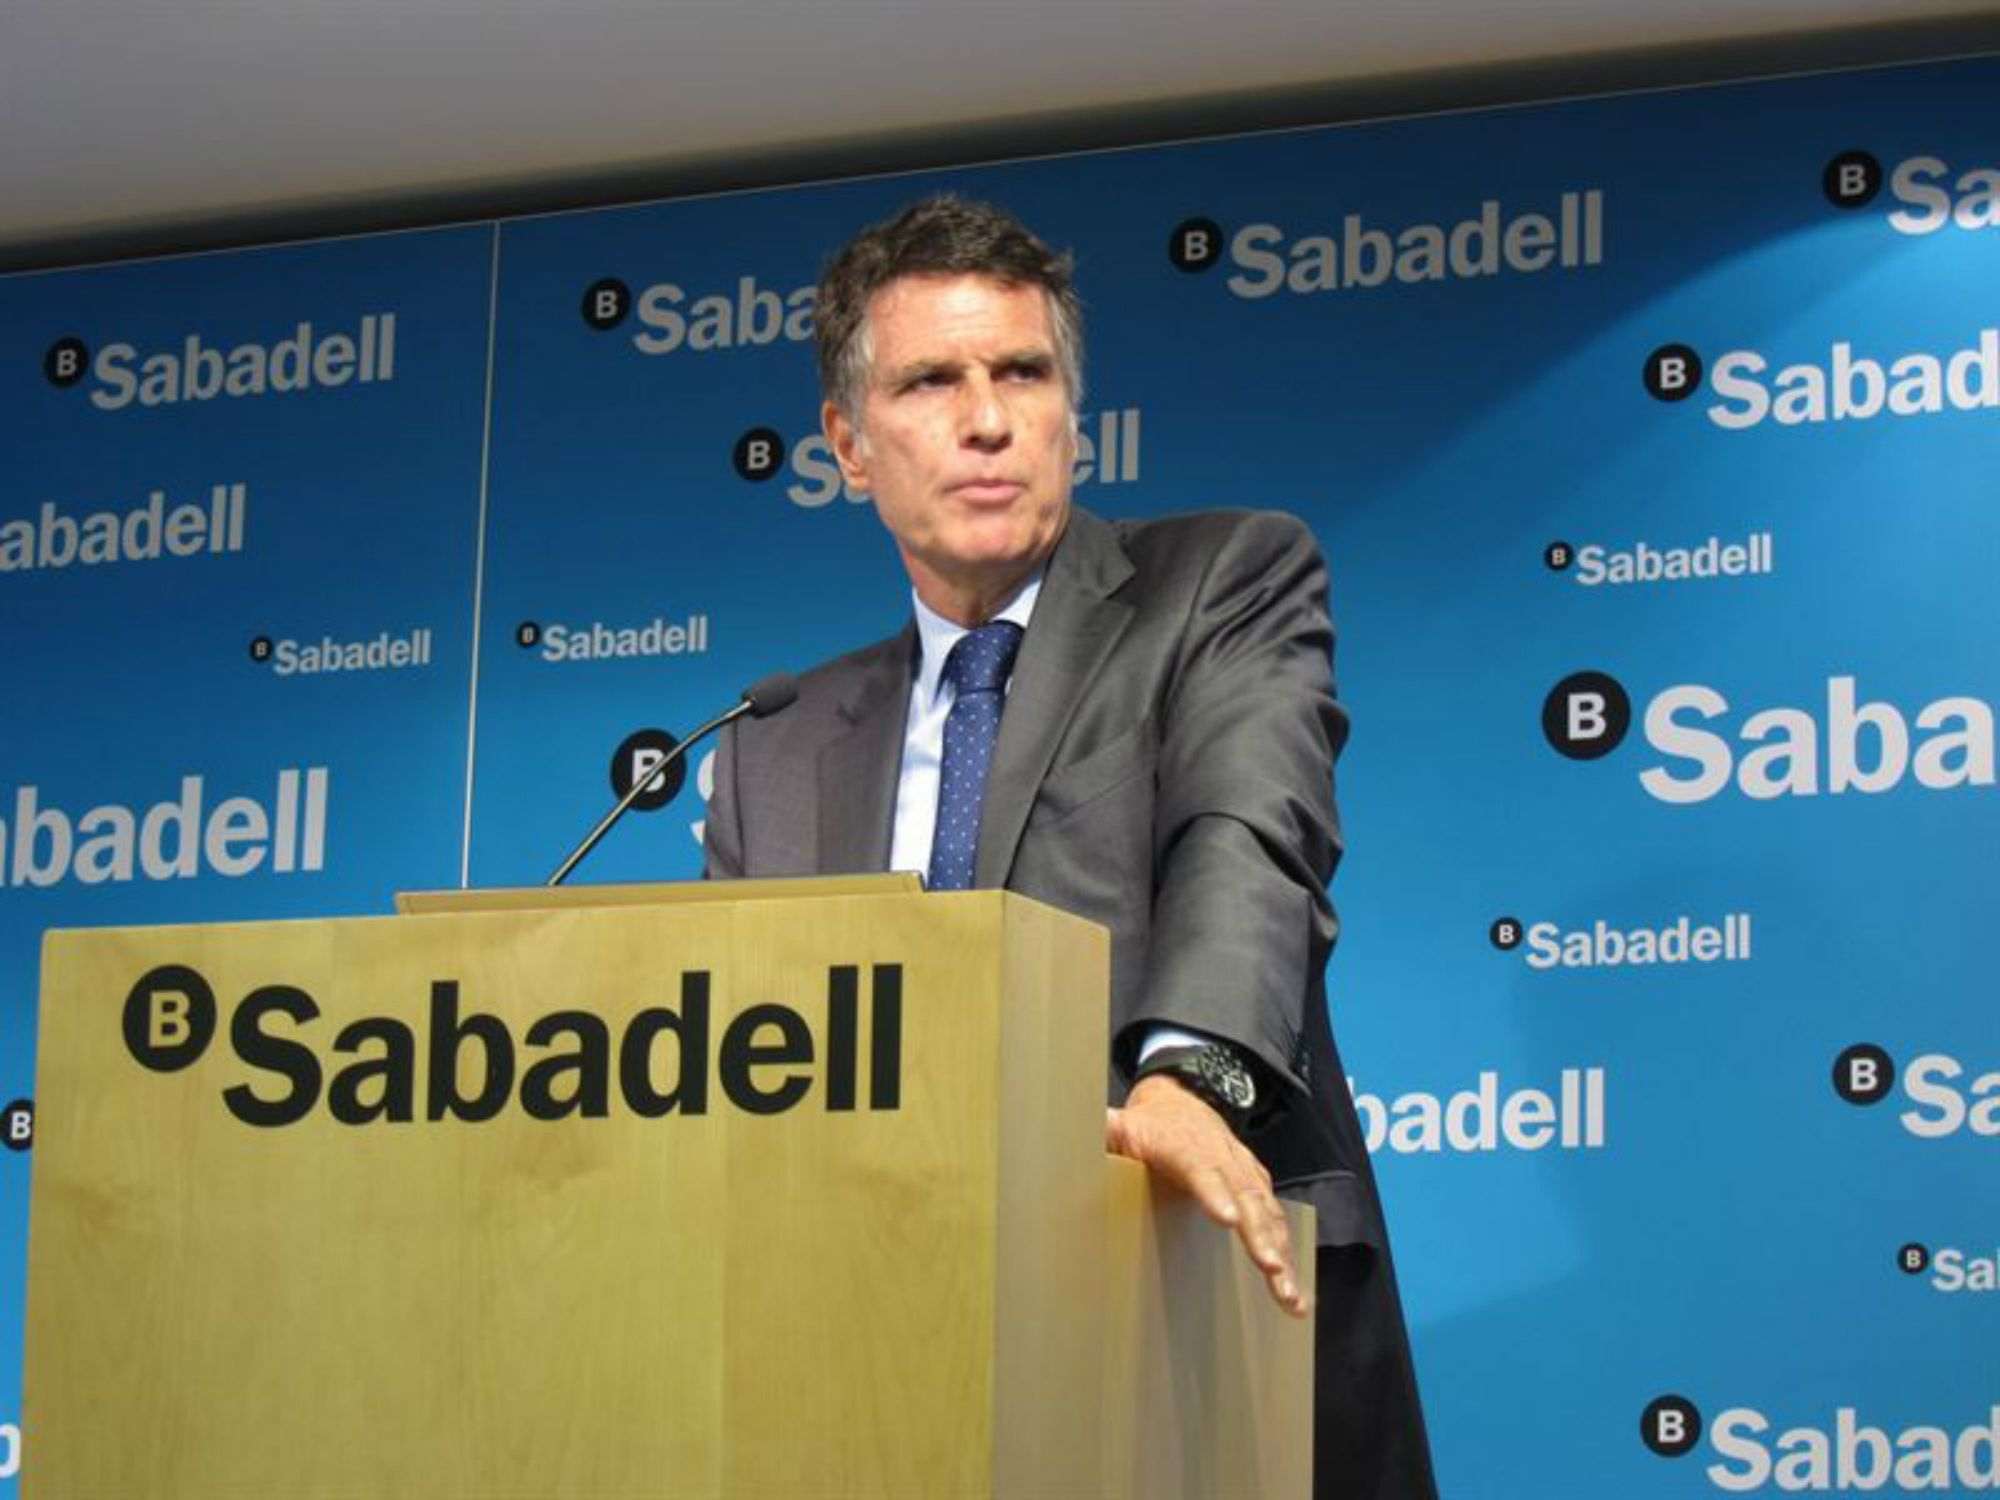 Banco Sabadell no se plantea retornar la sede a Catalunya "a corto plazo"